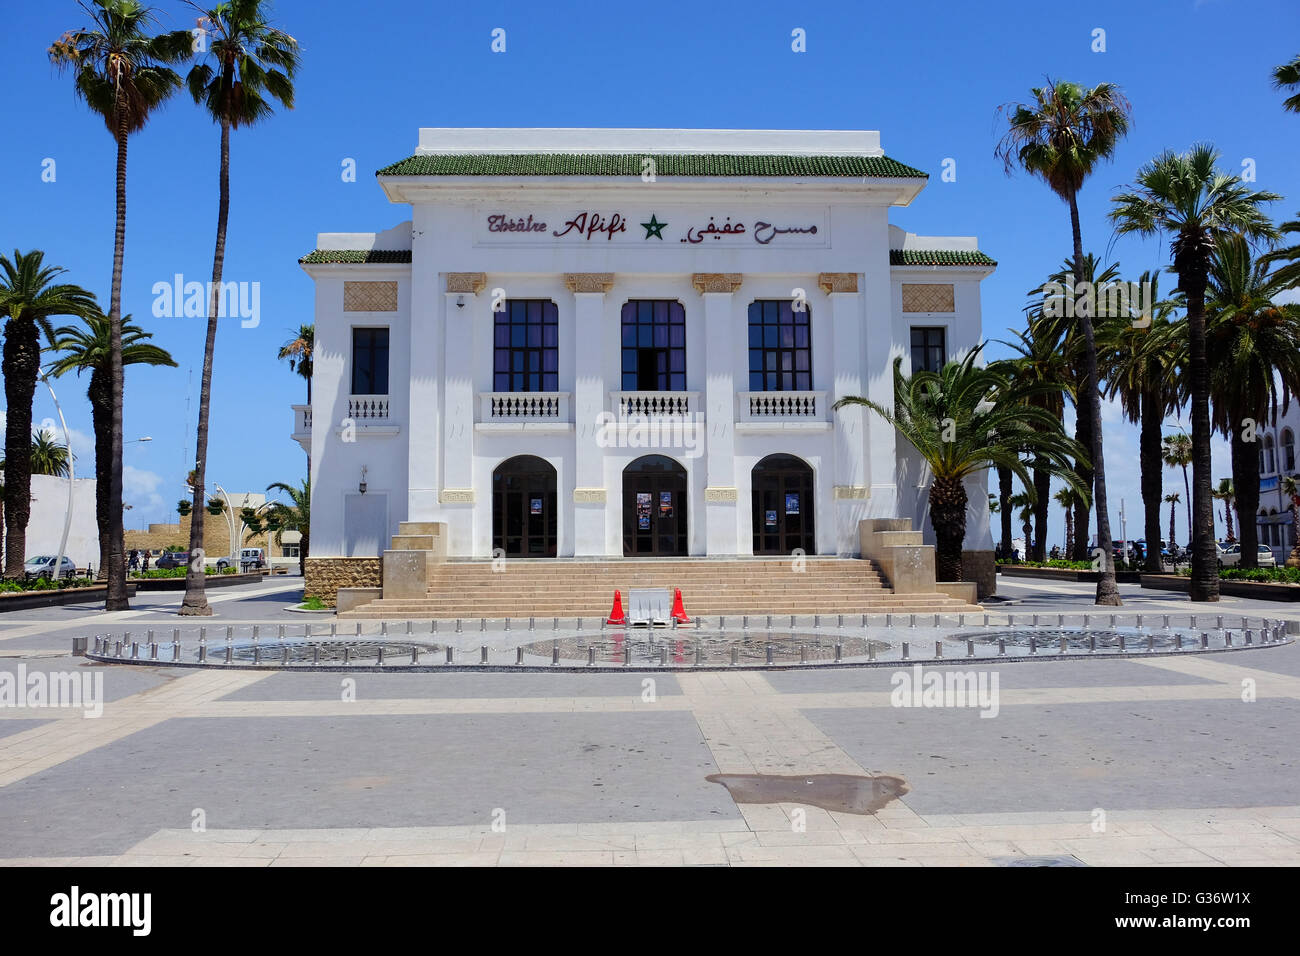 La partie moderne de la ville marocaine d'El Jadida, Maroc Banque D'Images